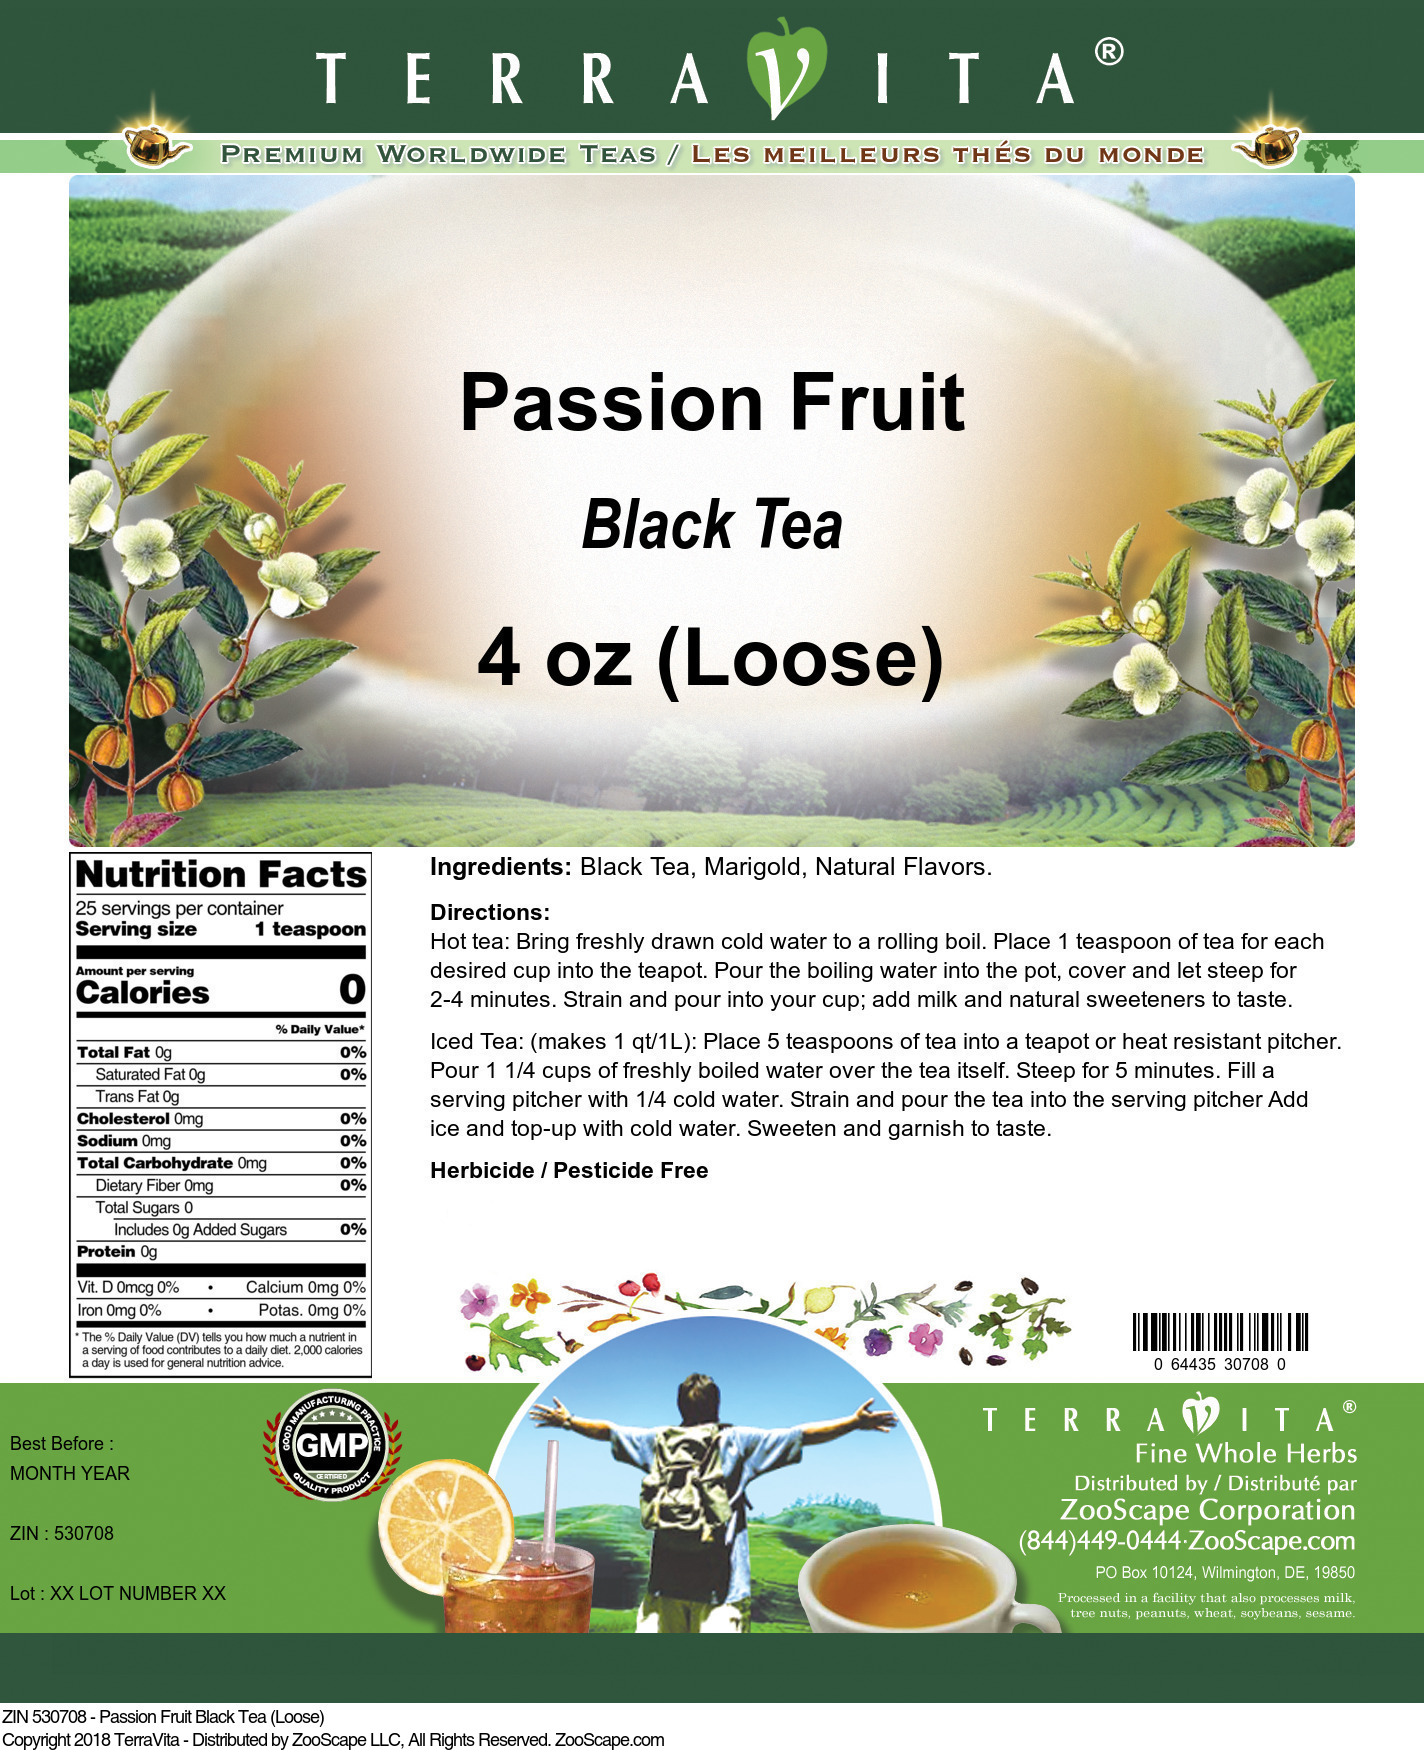 Passion Fruit Black Tea (Loose) - Label